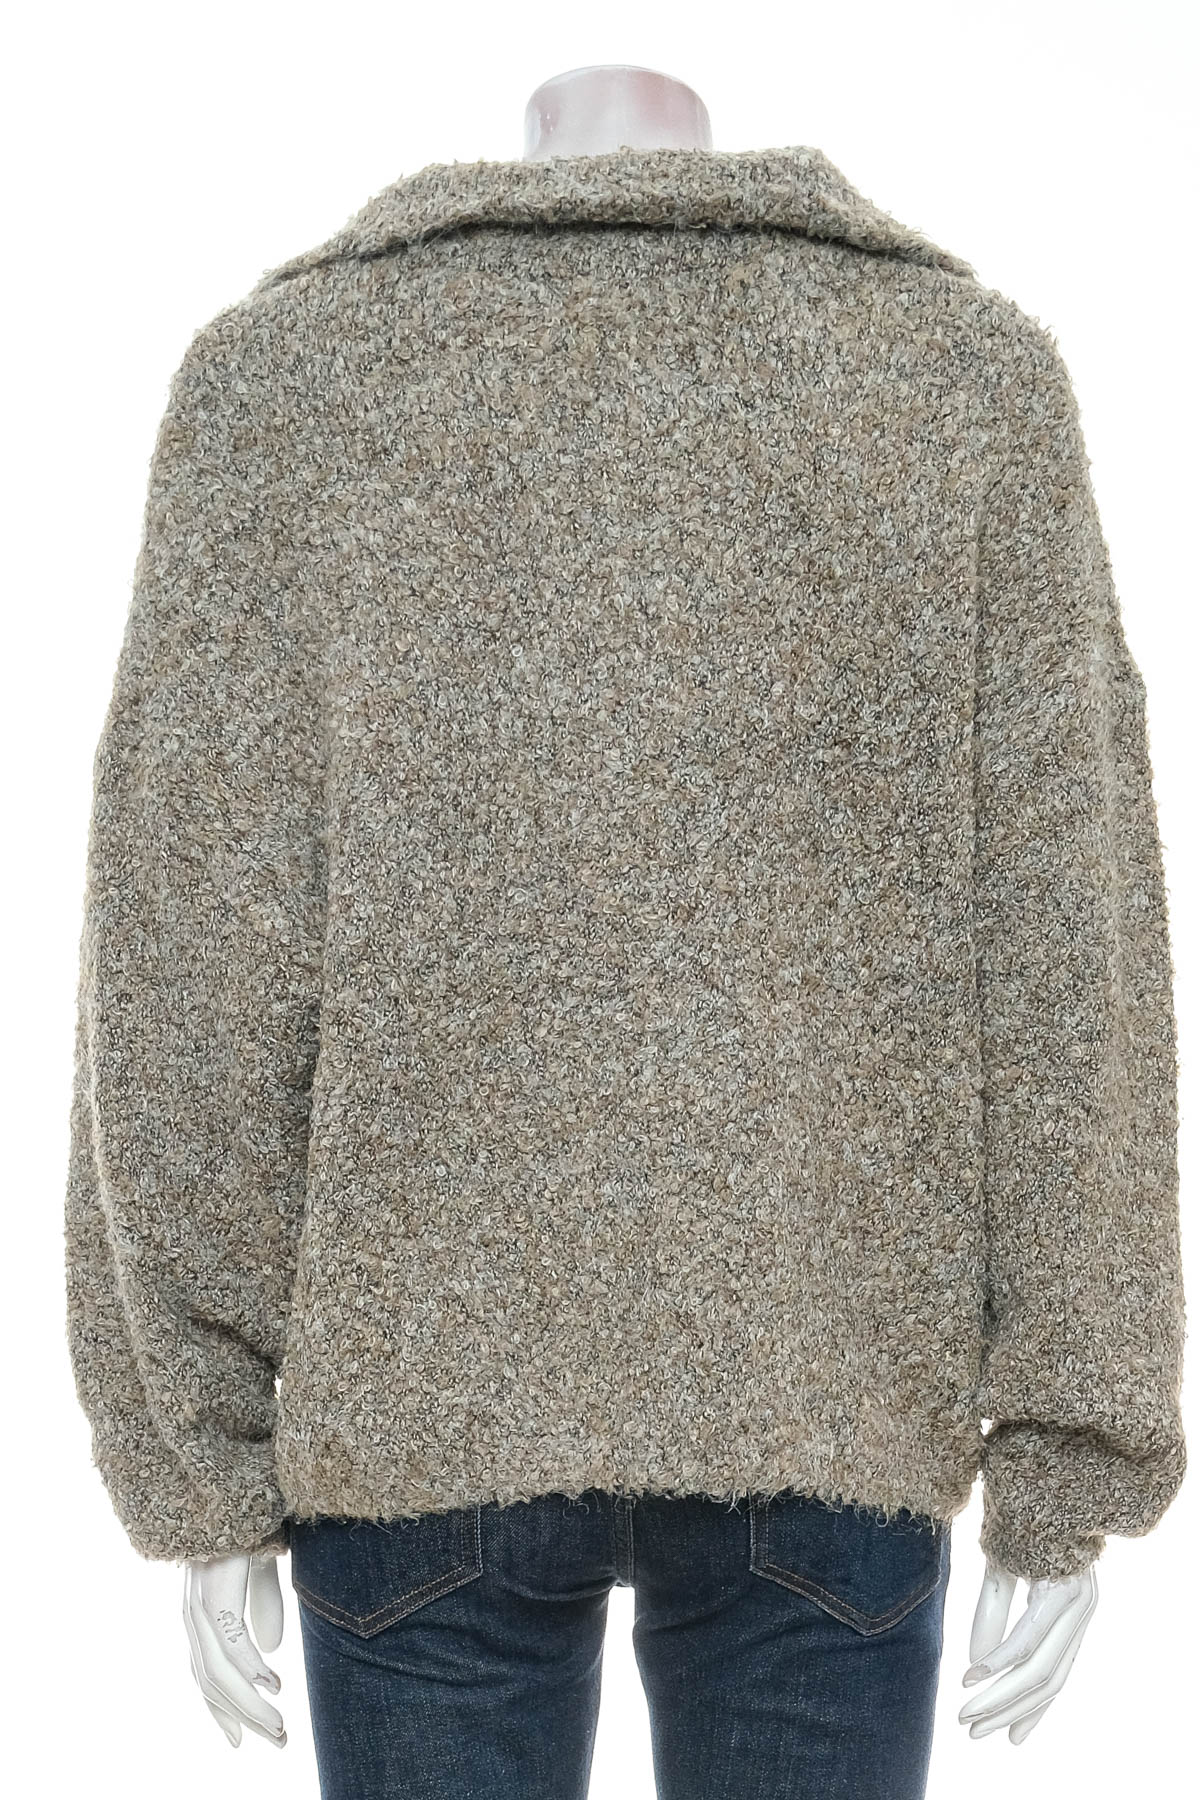 Women's sweater - Universal Thread - 1